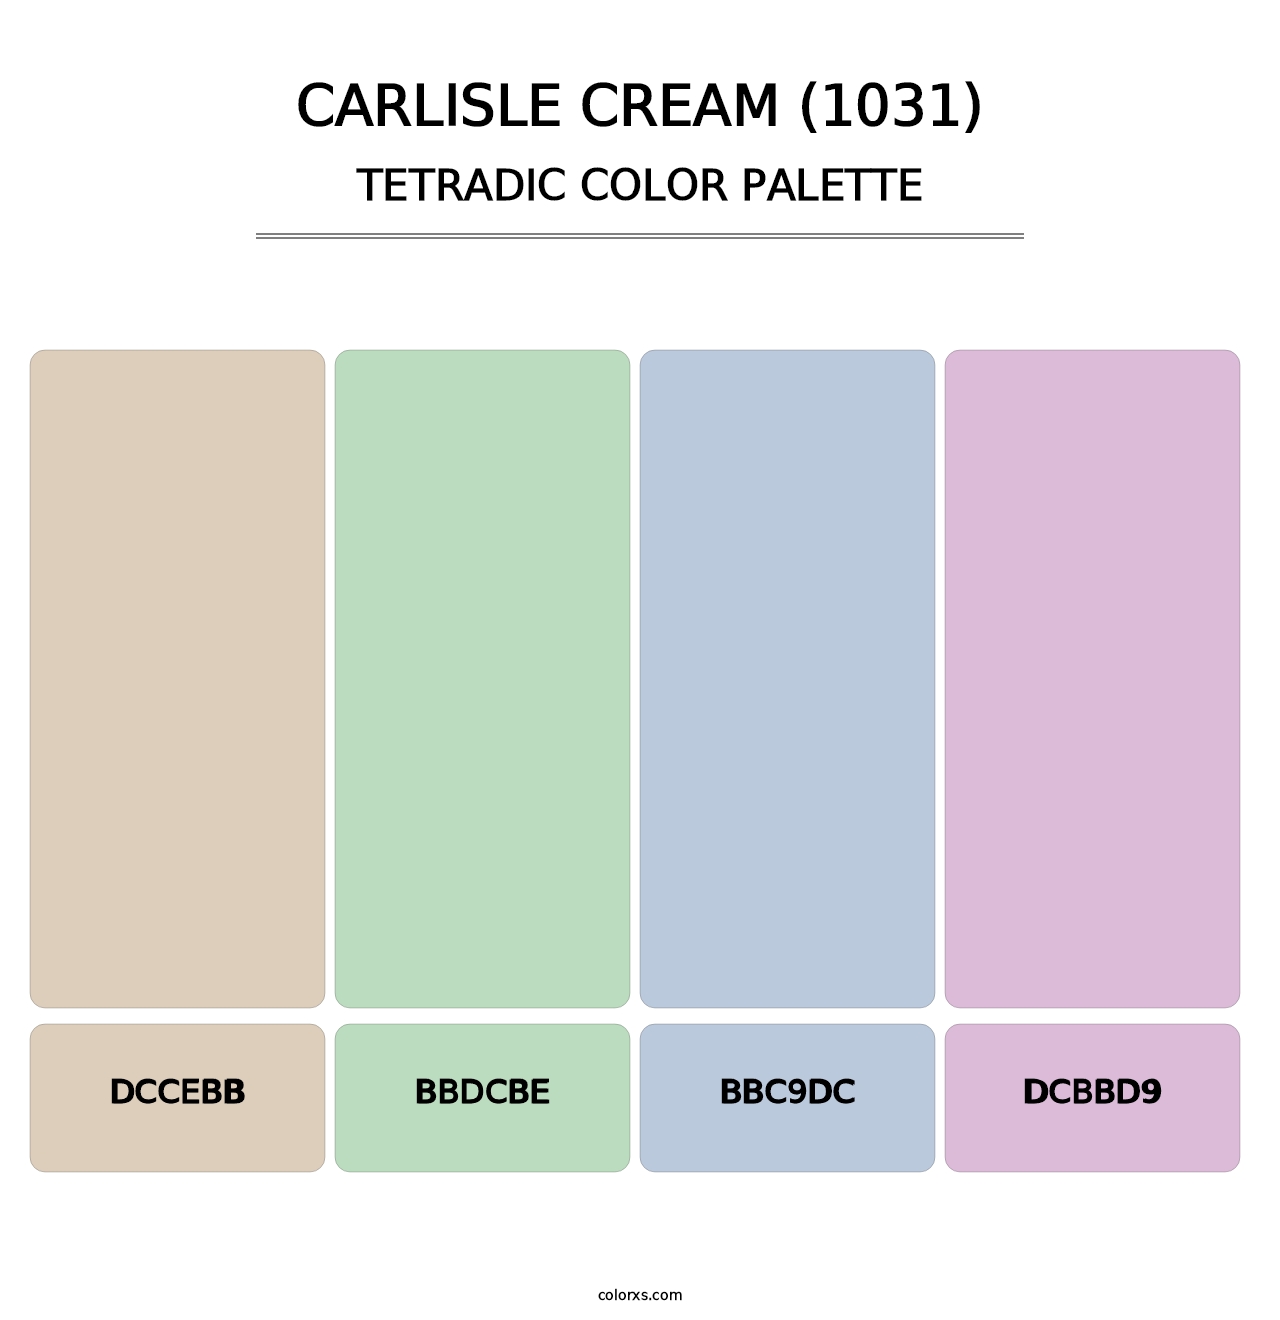 Carlisle Cream (1031) - Tetradic Color Palette